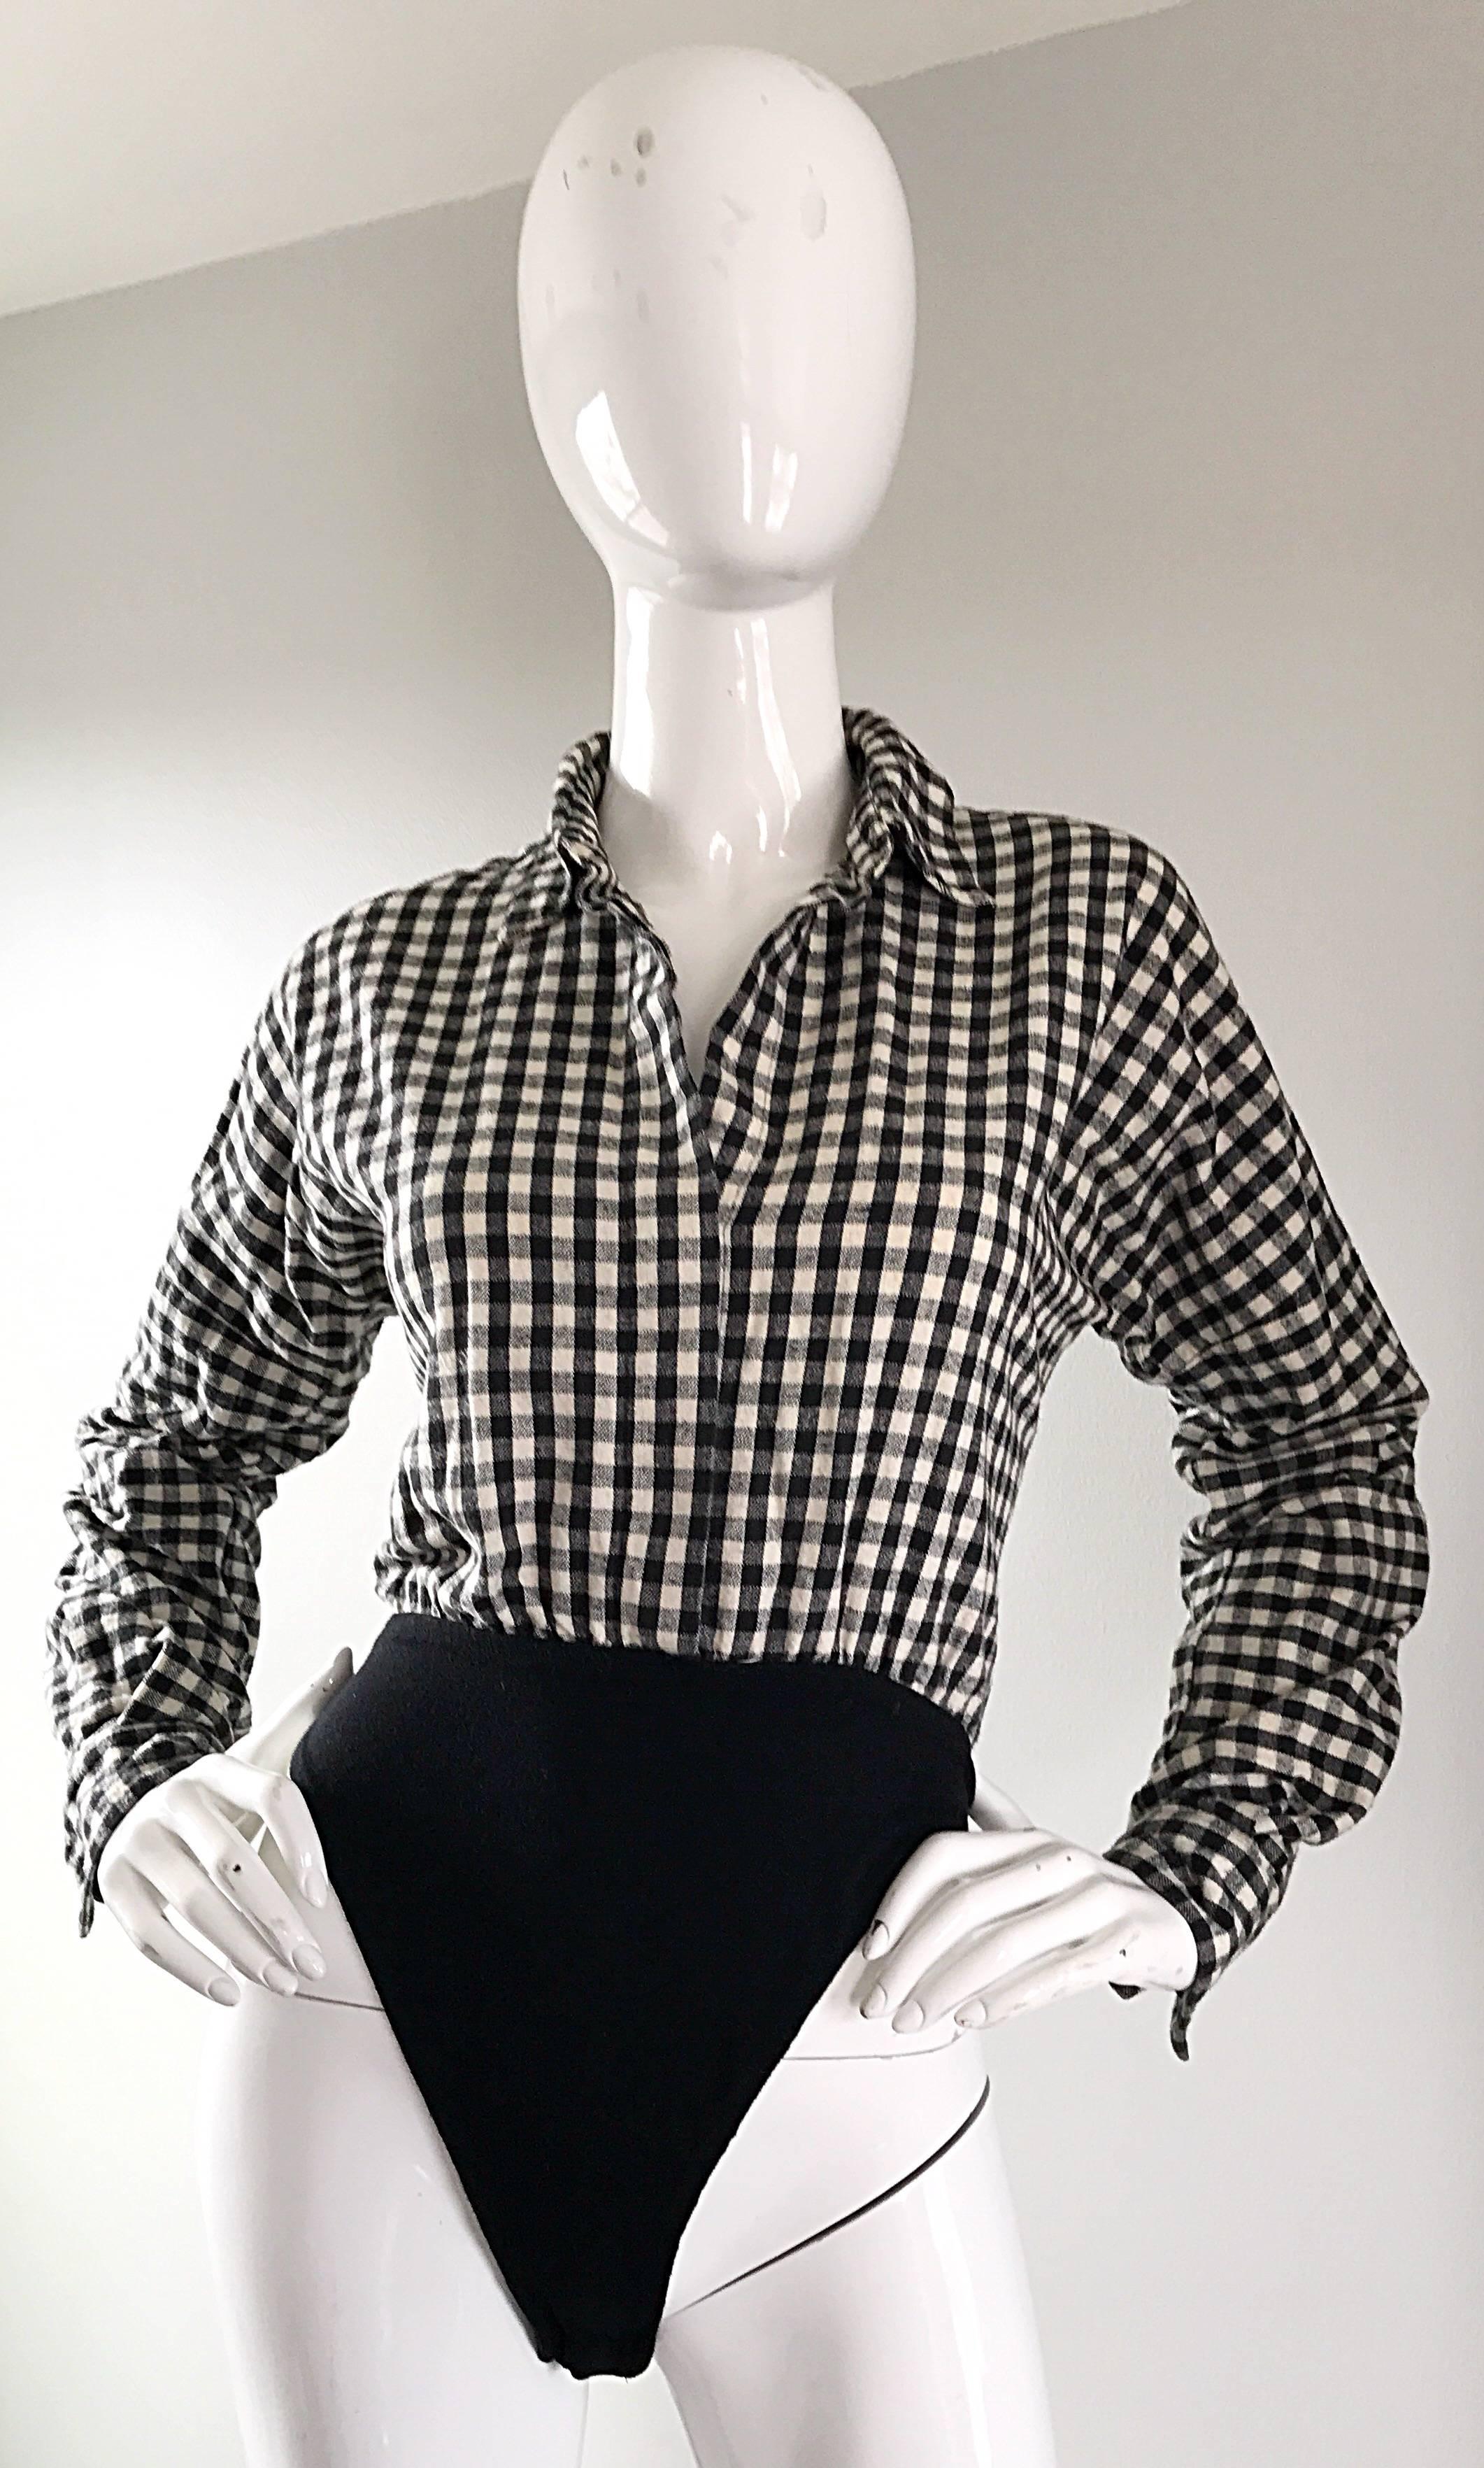 checkered bodysuit